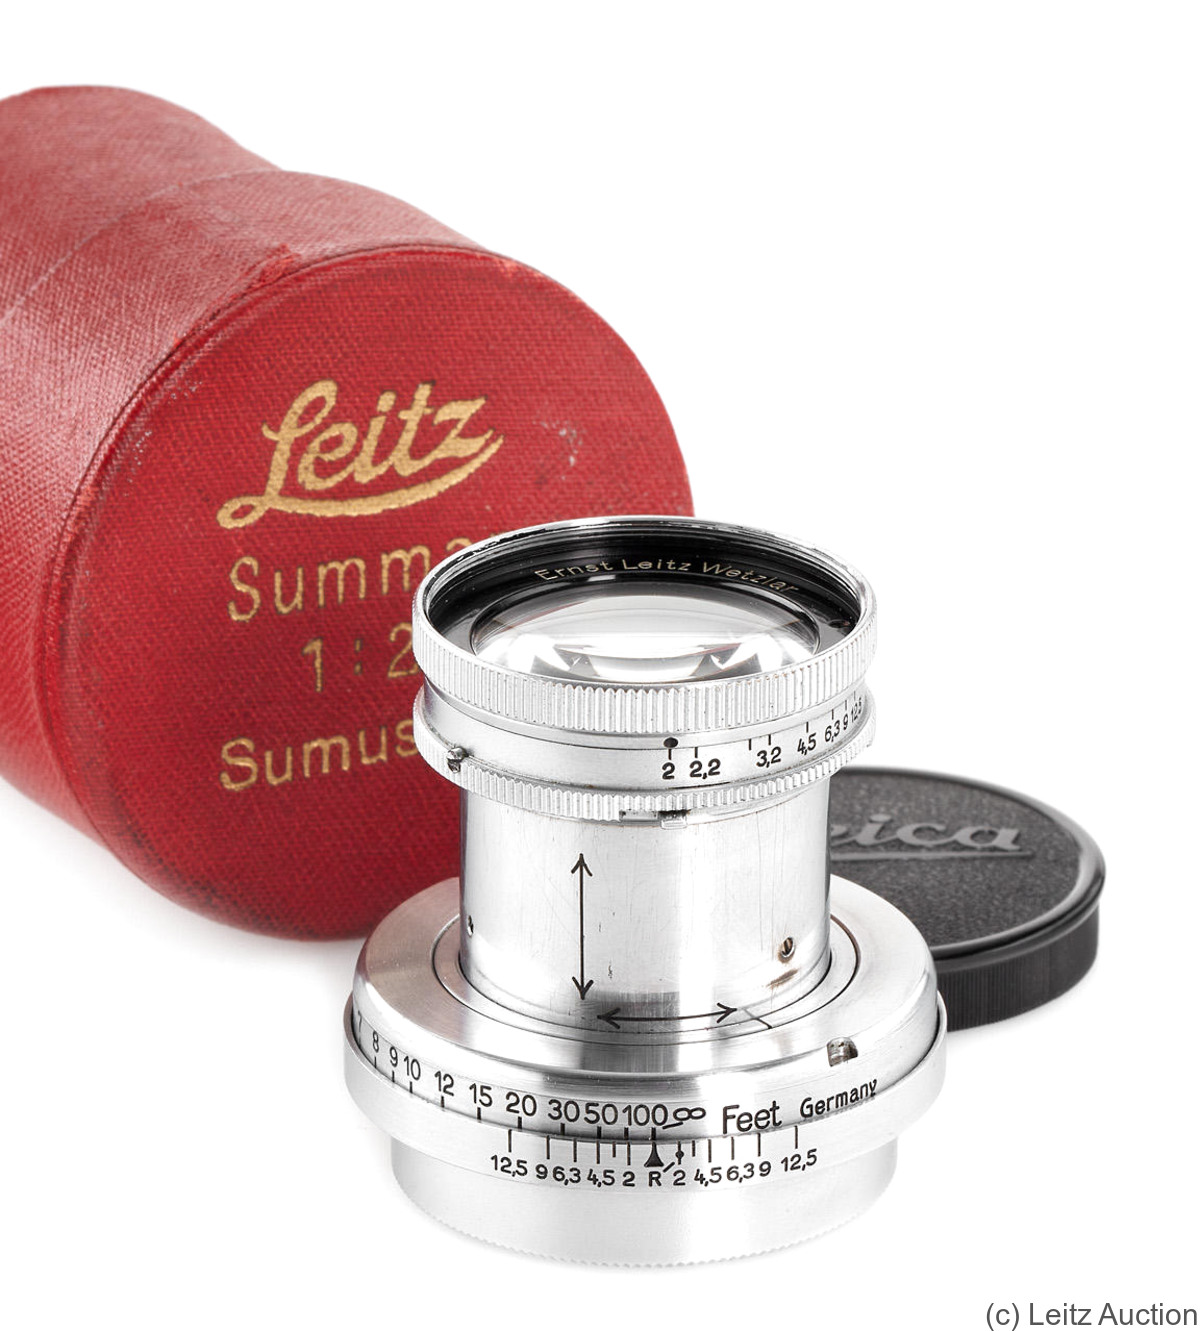 Leitz: 50mm (5cm) f2 Summar (SM, collapsible, chrome) 'Agfa' camera